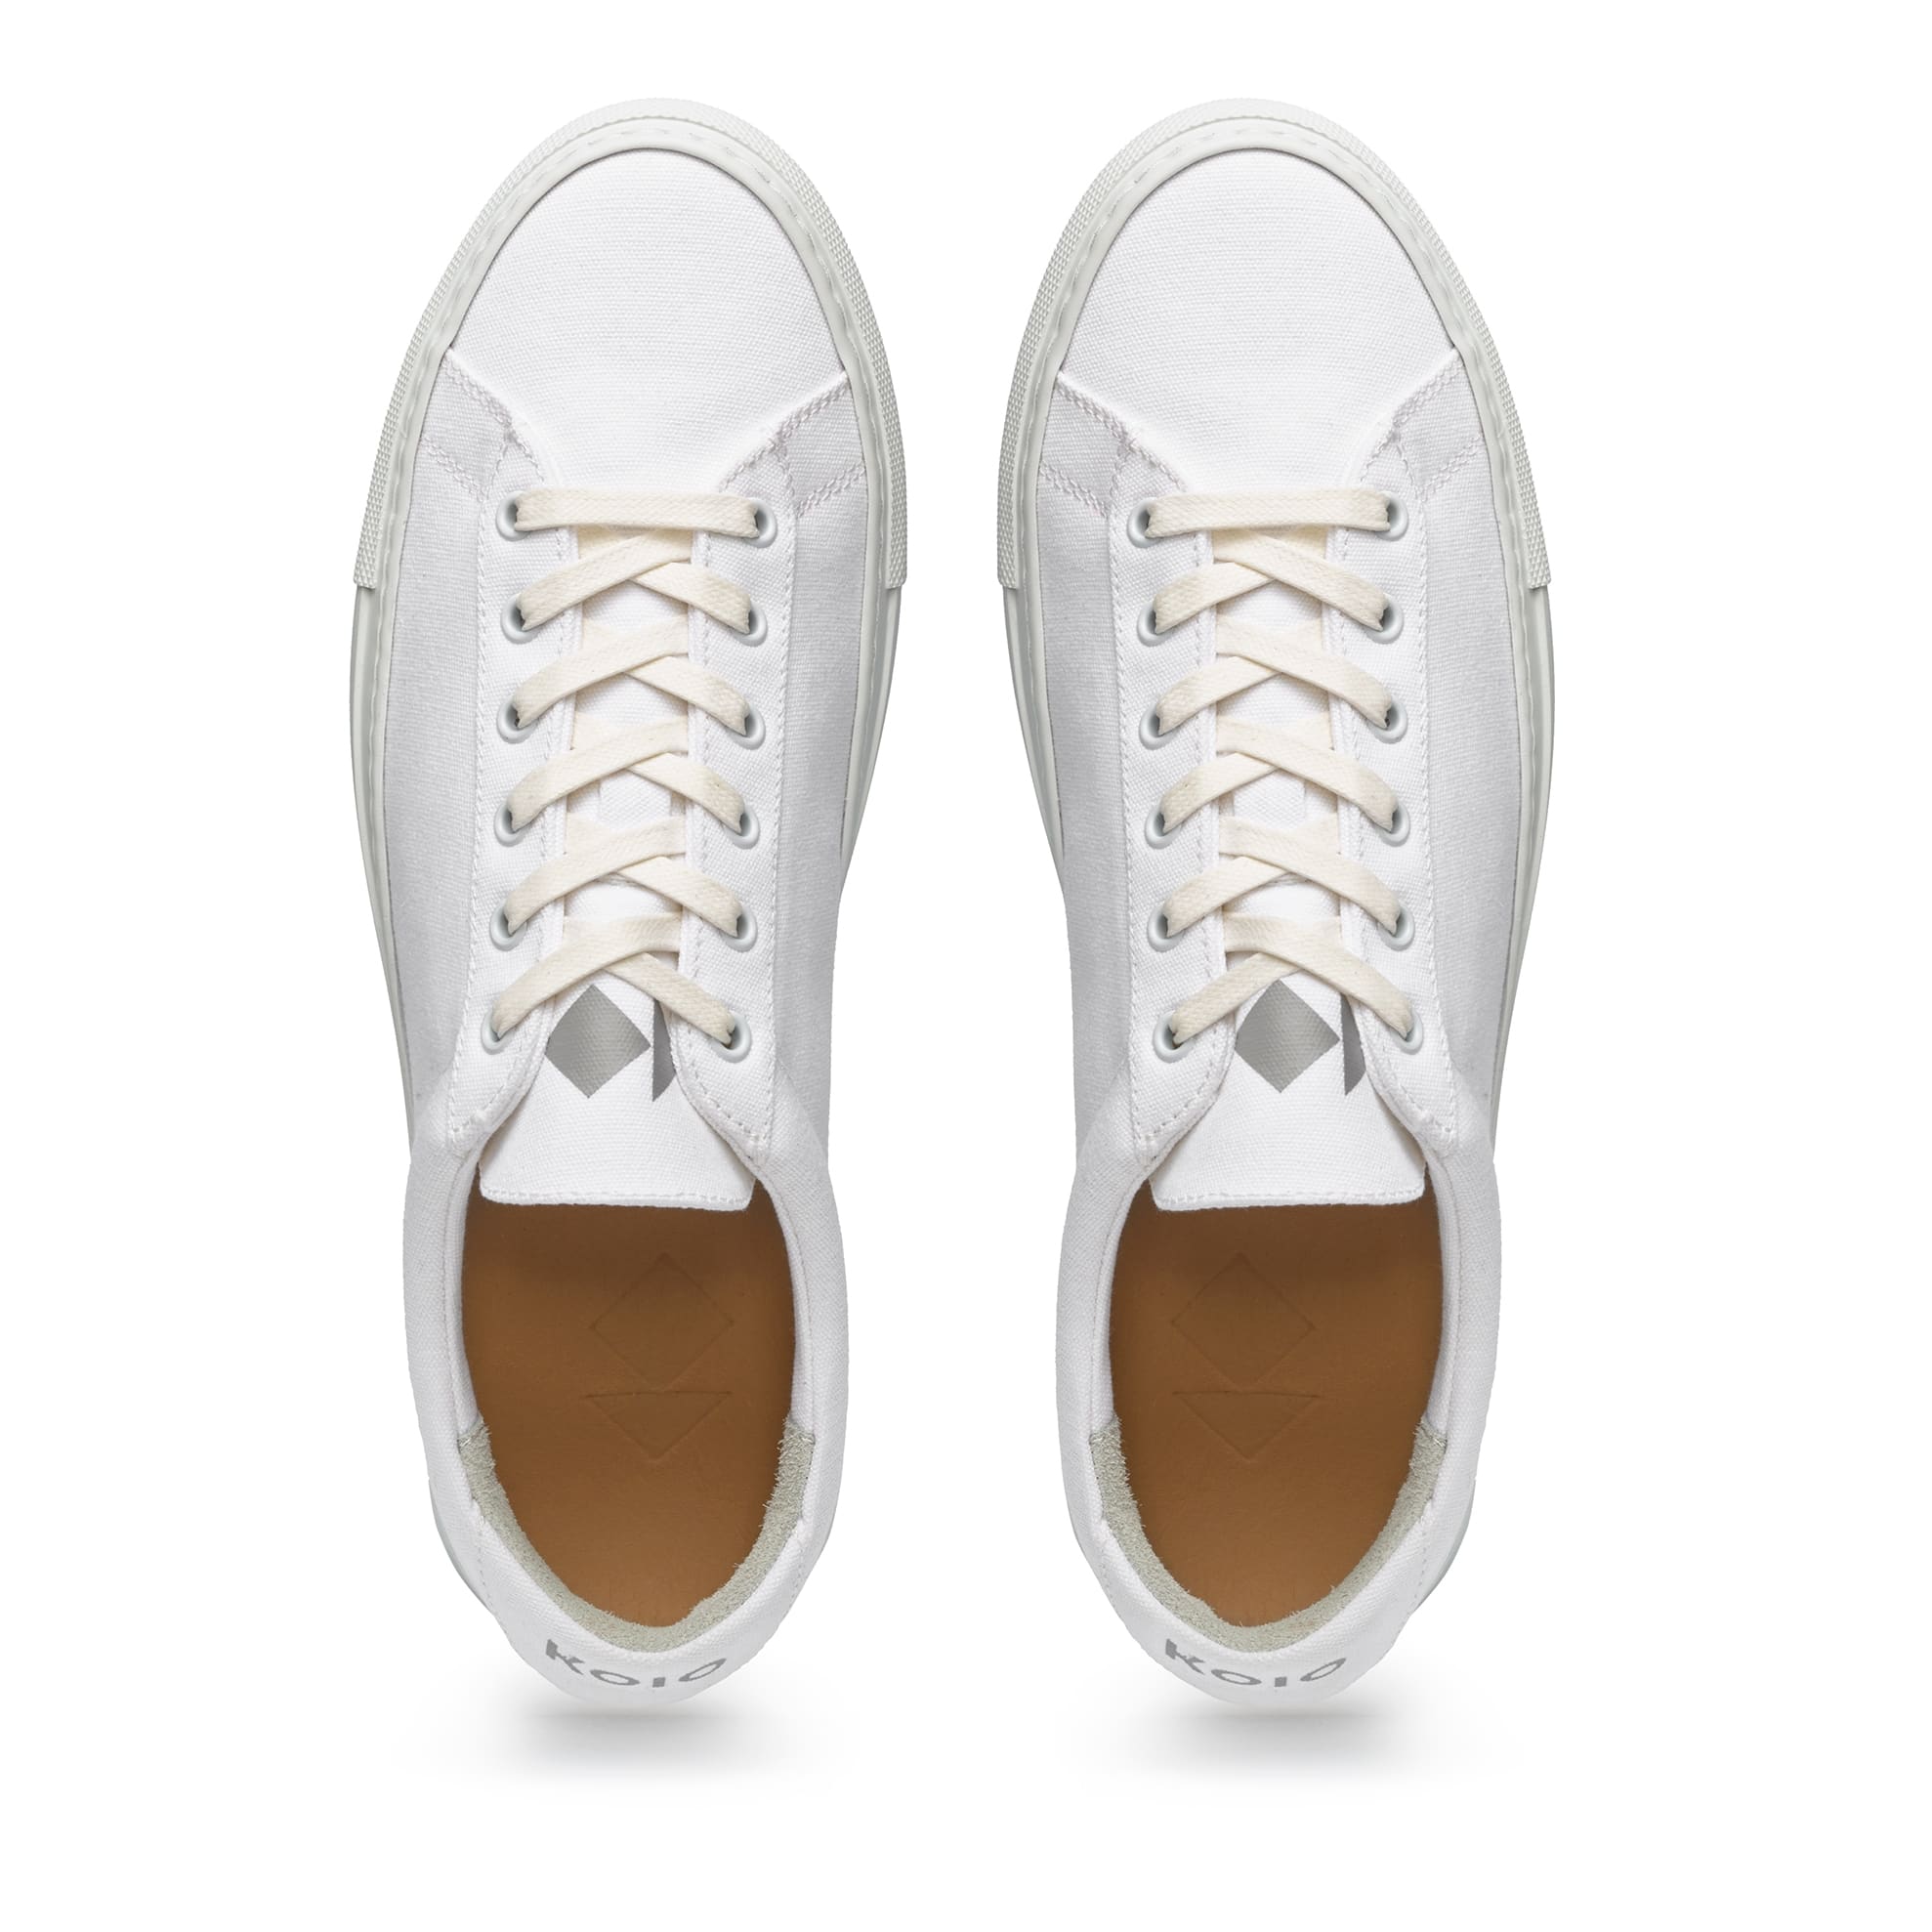 The Koio Capri Bianco Low-Top Sneakers—Canvas - White | M.M.LaFleur